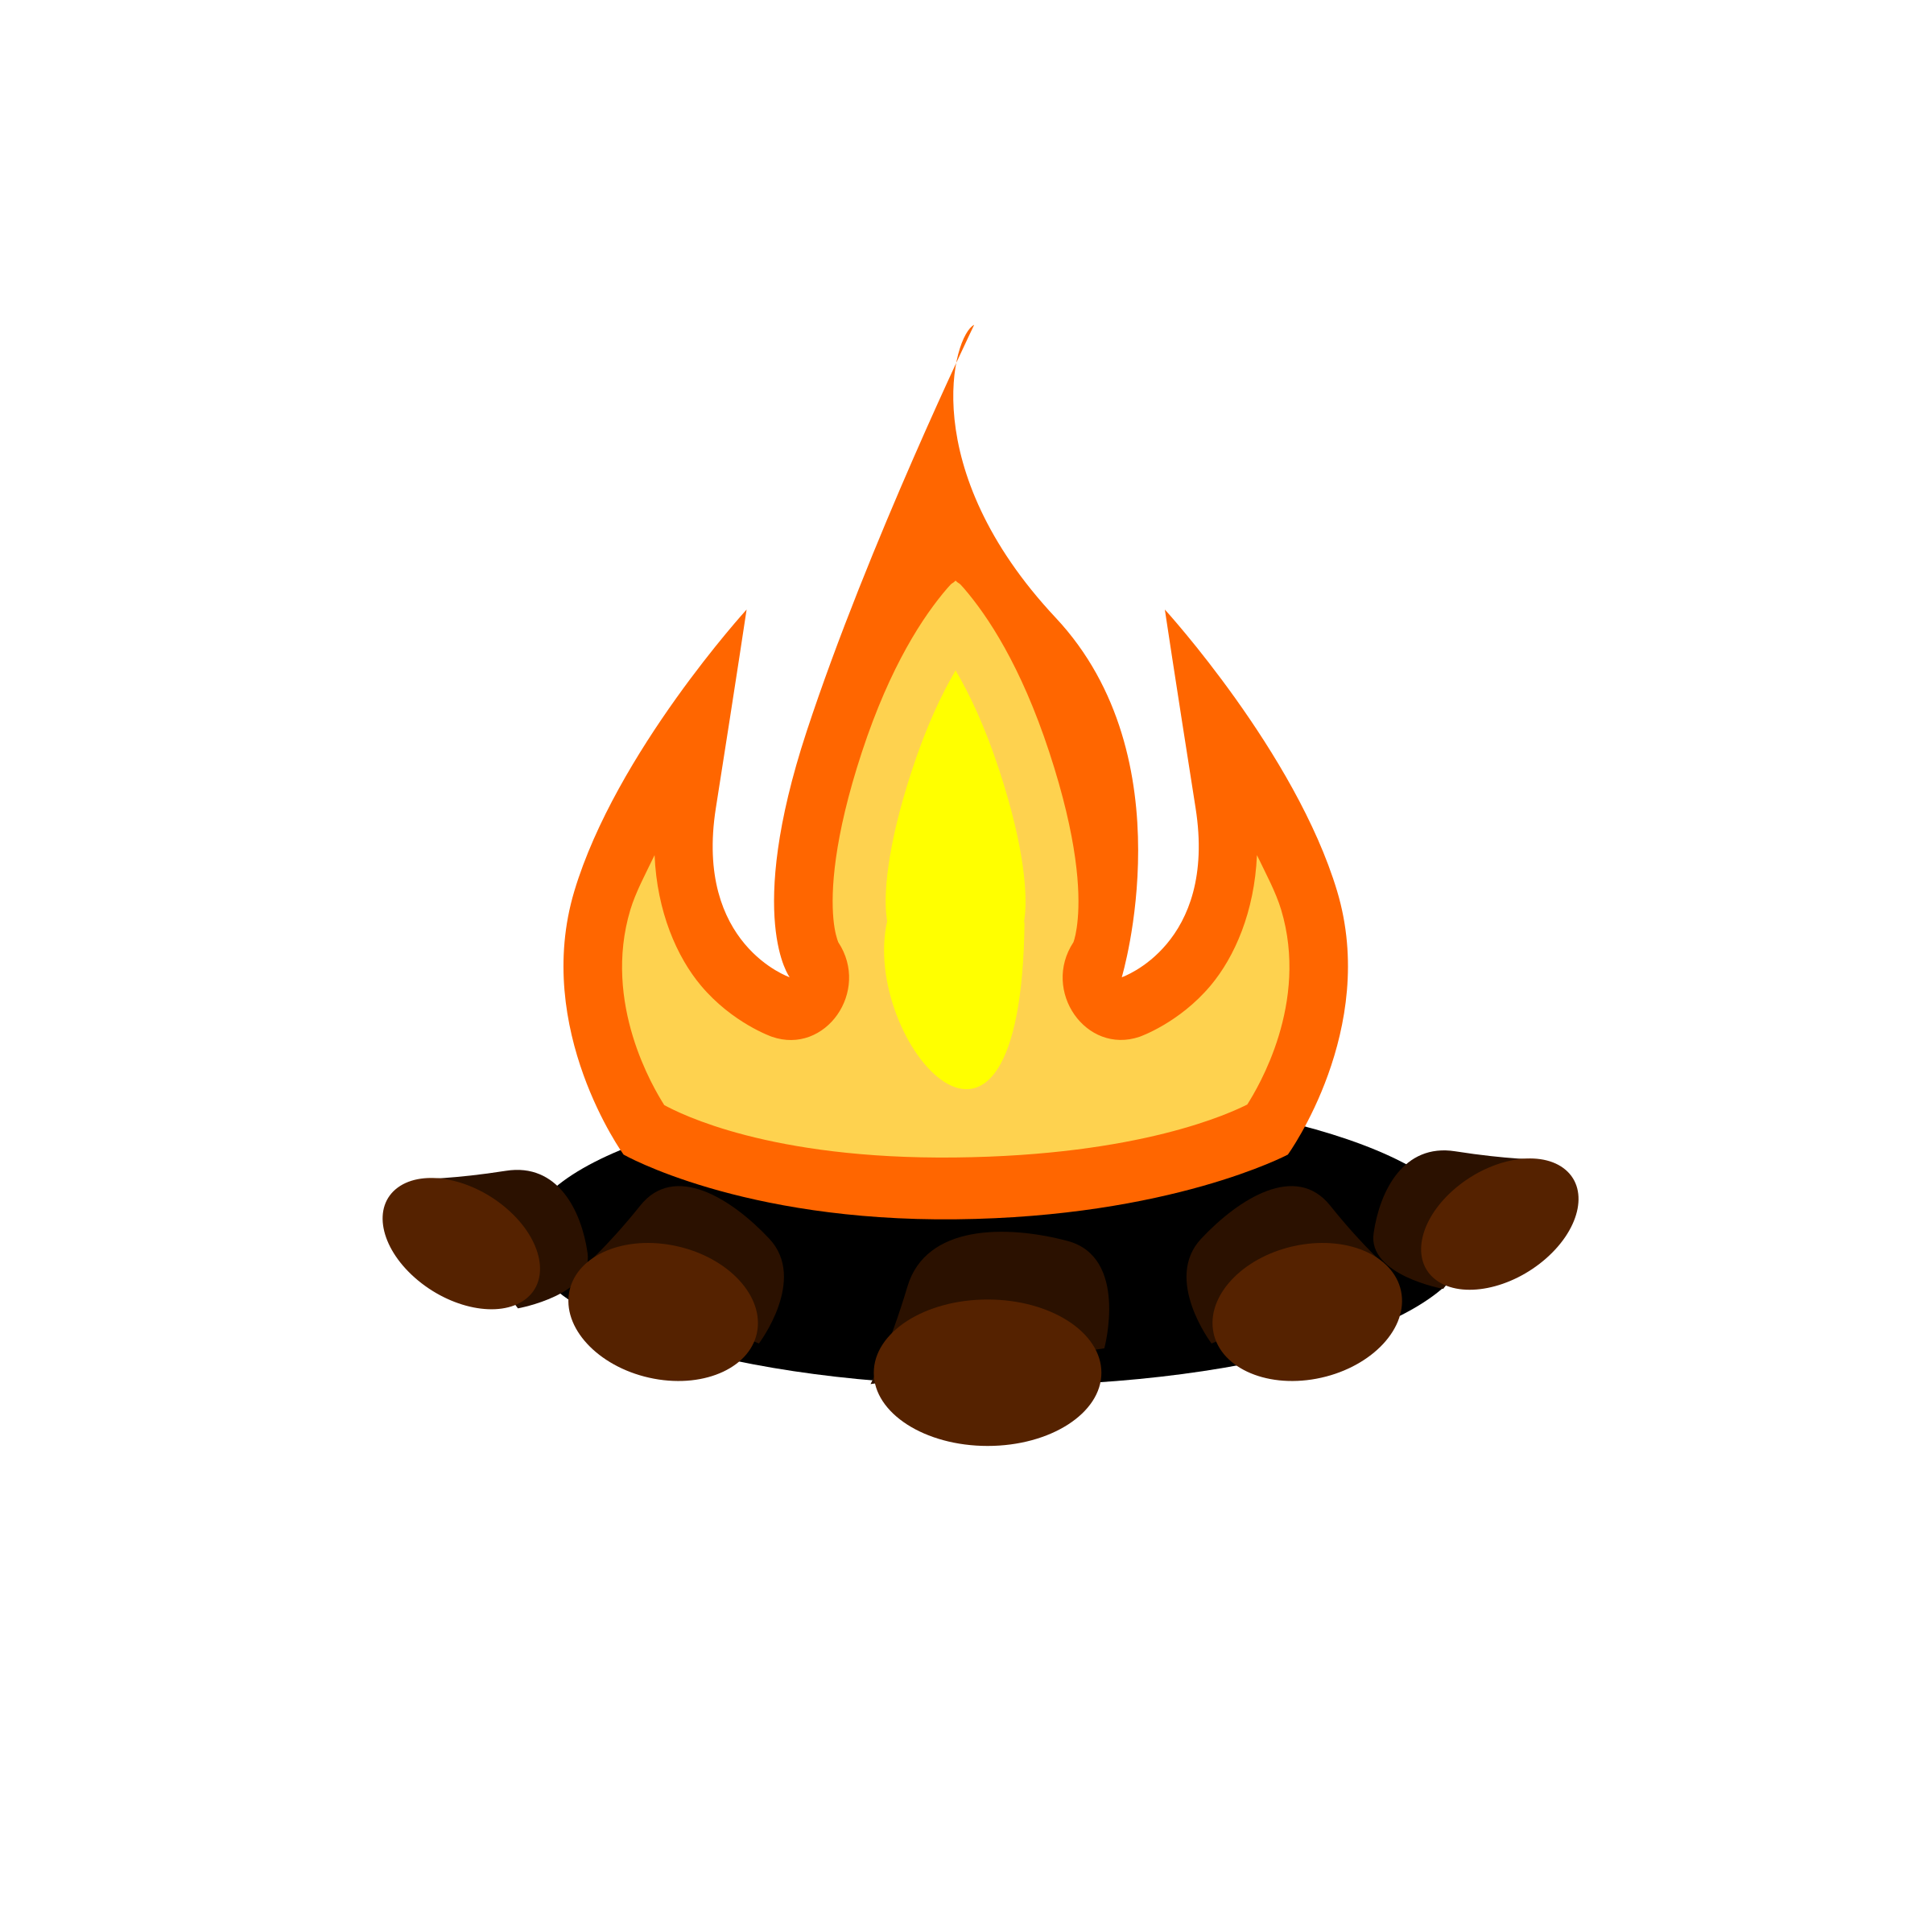 Campfire clipart camp fire